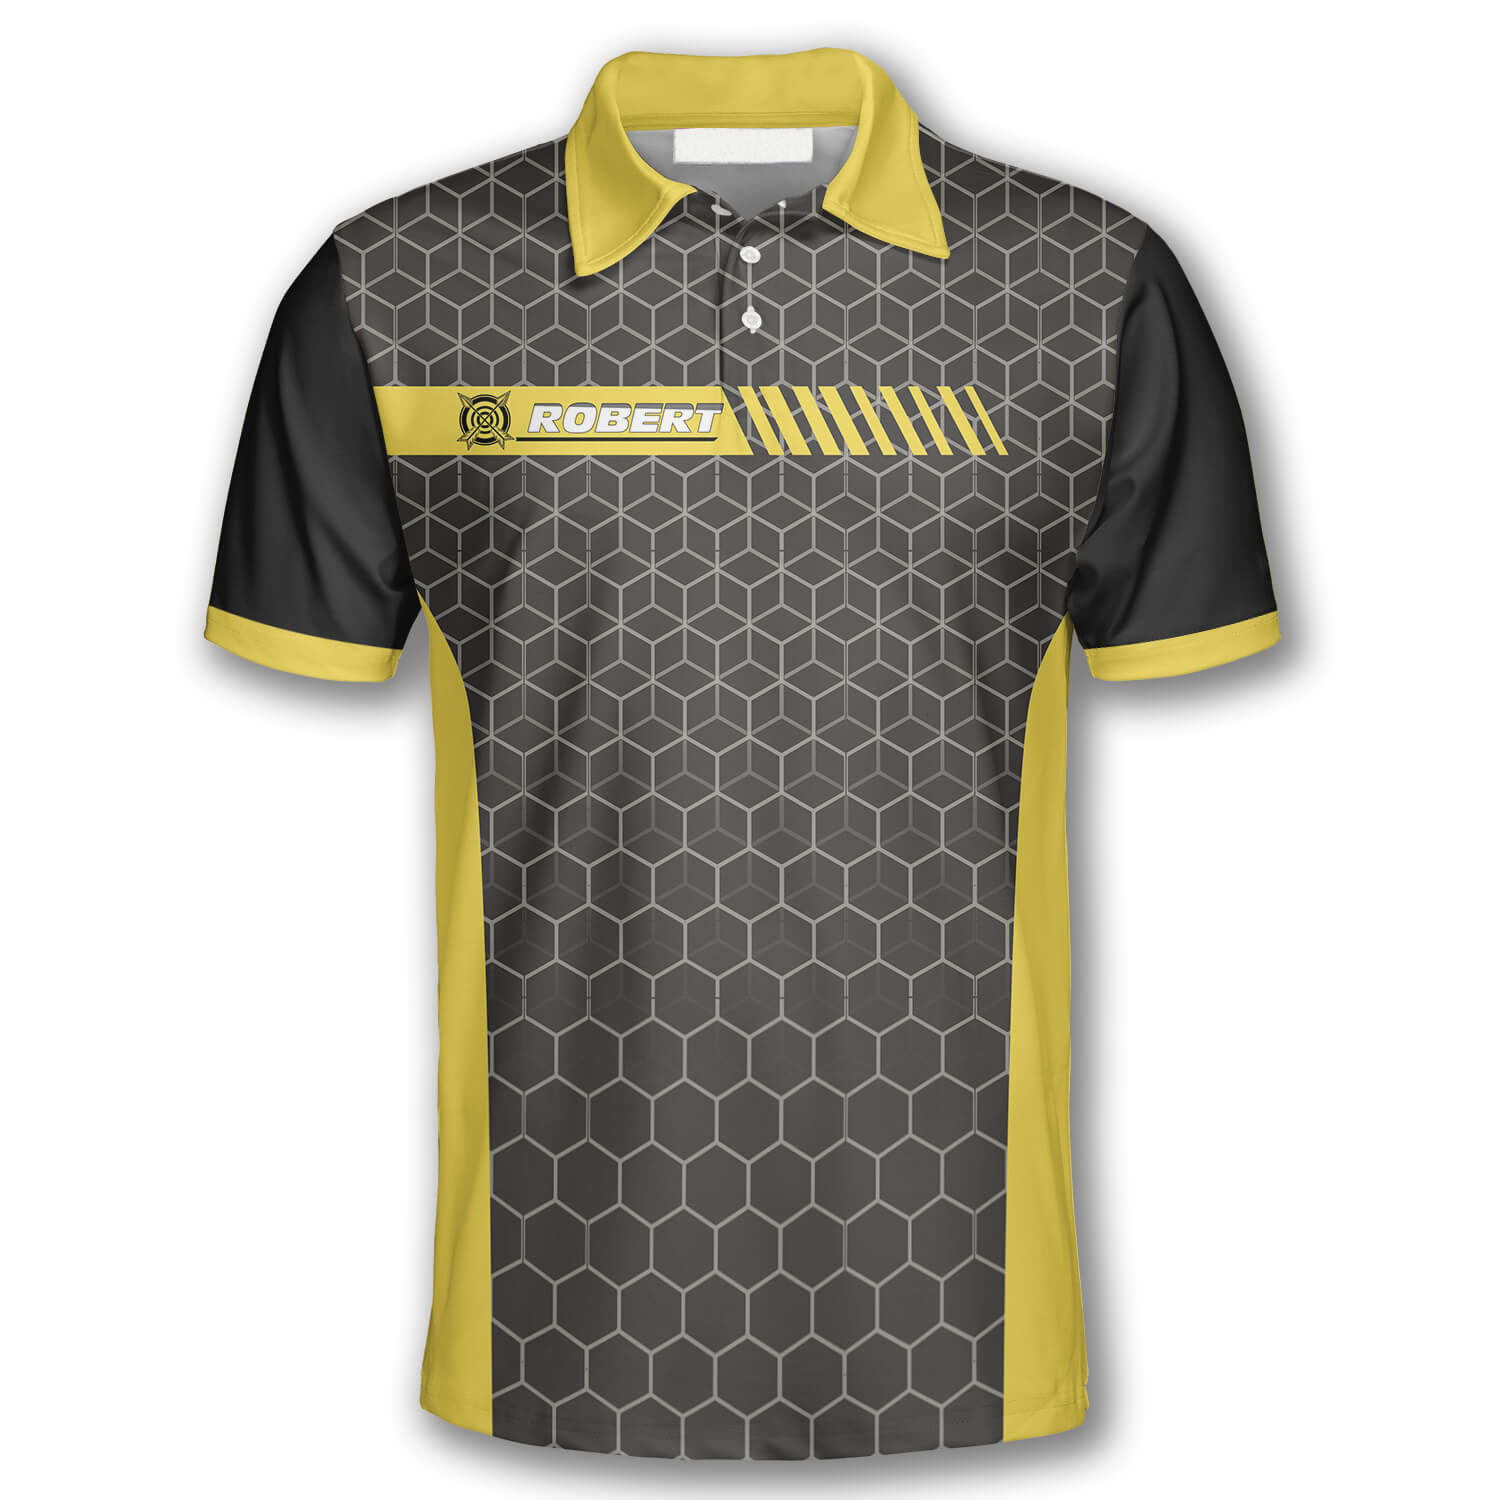 3D All Over Print Archery Honeycomb Pattern Emblem Custom Archery Shirts for Men